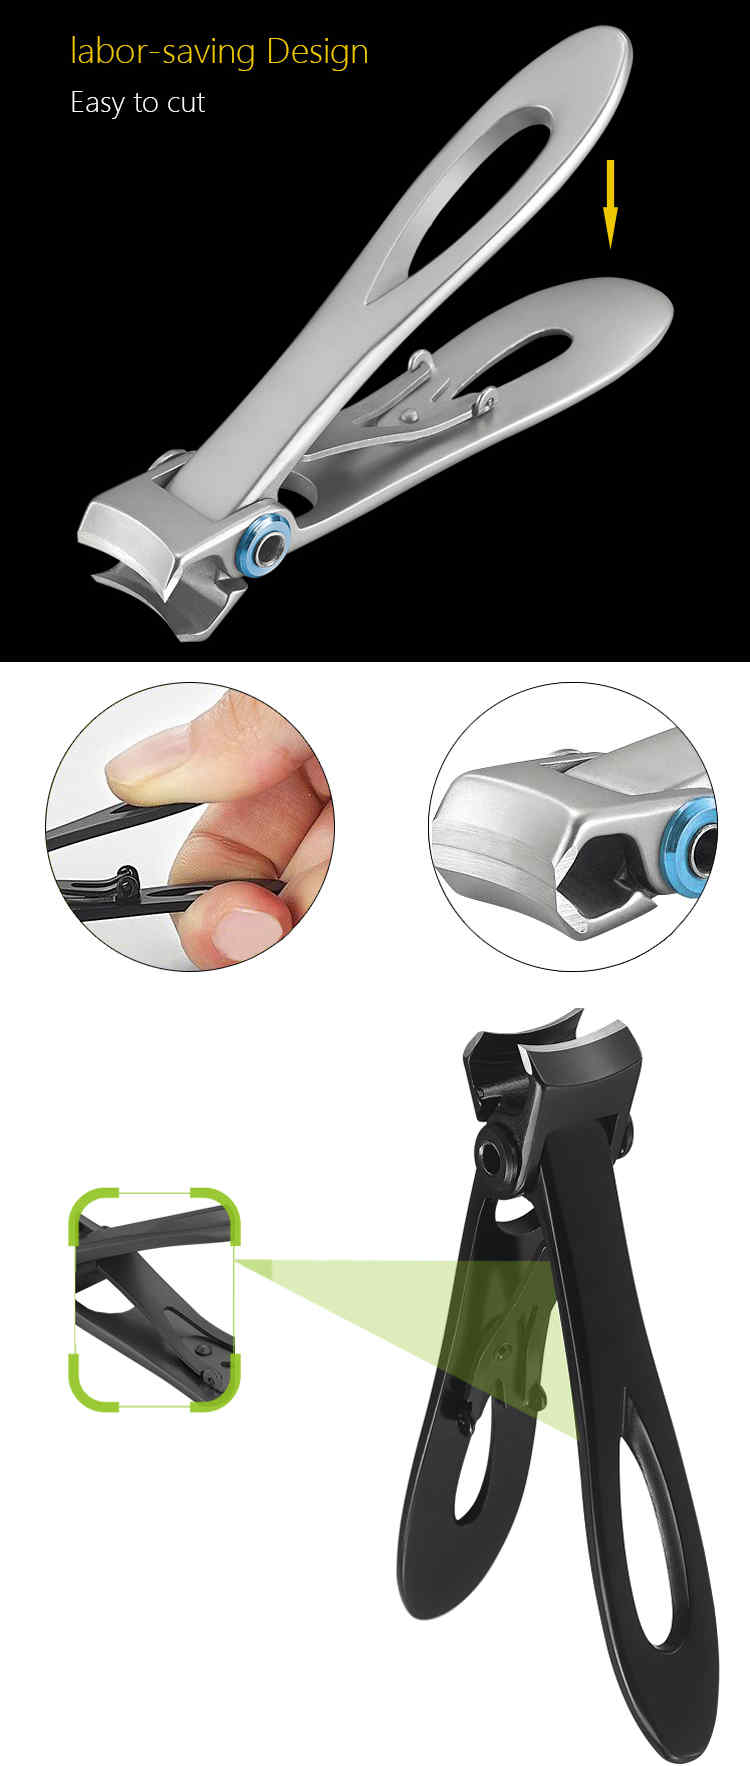 YFMreg-ZJQ-1-Dual-bend-Nail-Clipper-Finger-Toenails-Cutter-File-Pusher-Manicure-Pedicure-Tools-Kits-1272397